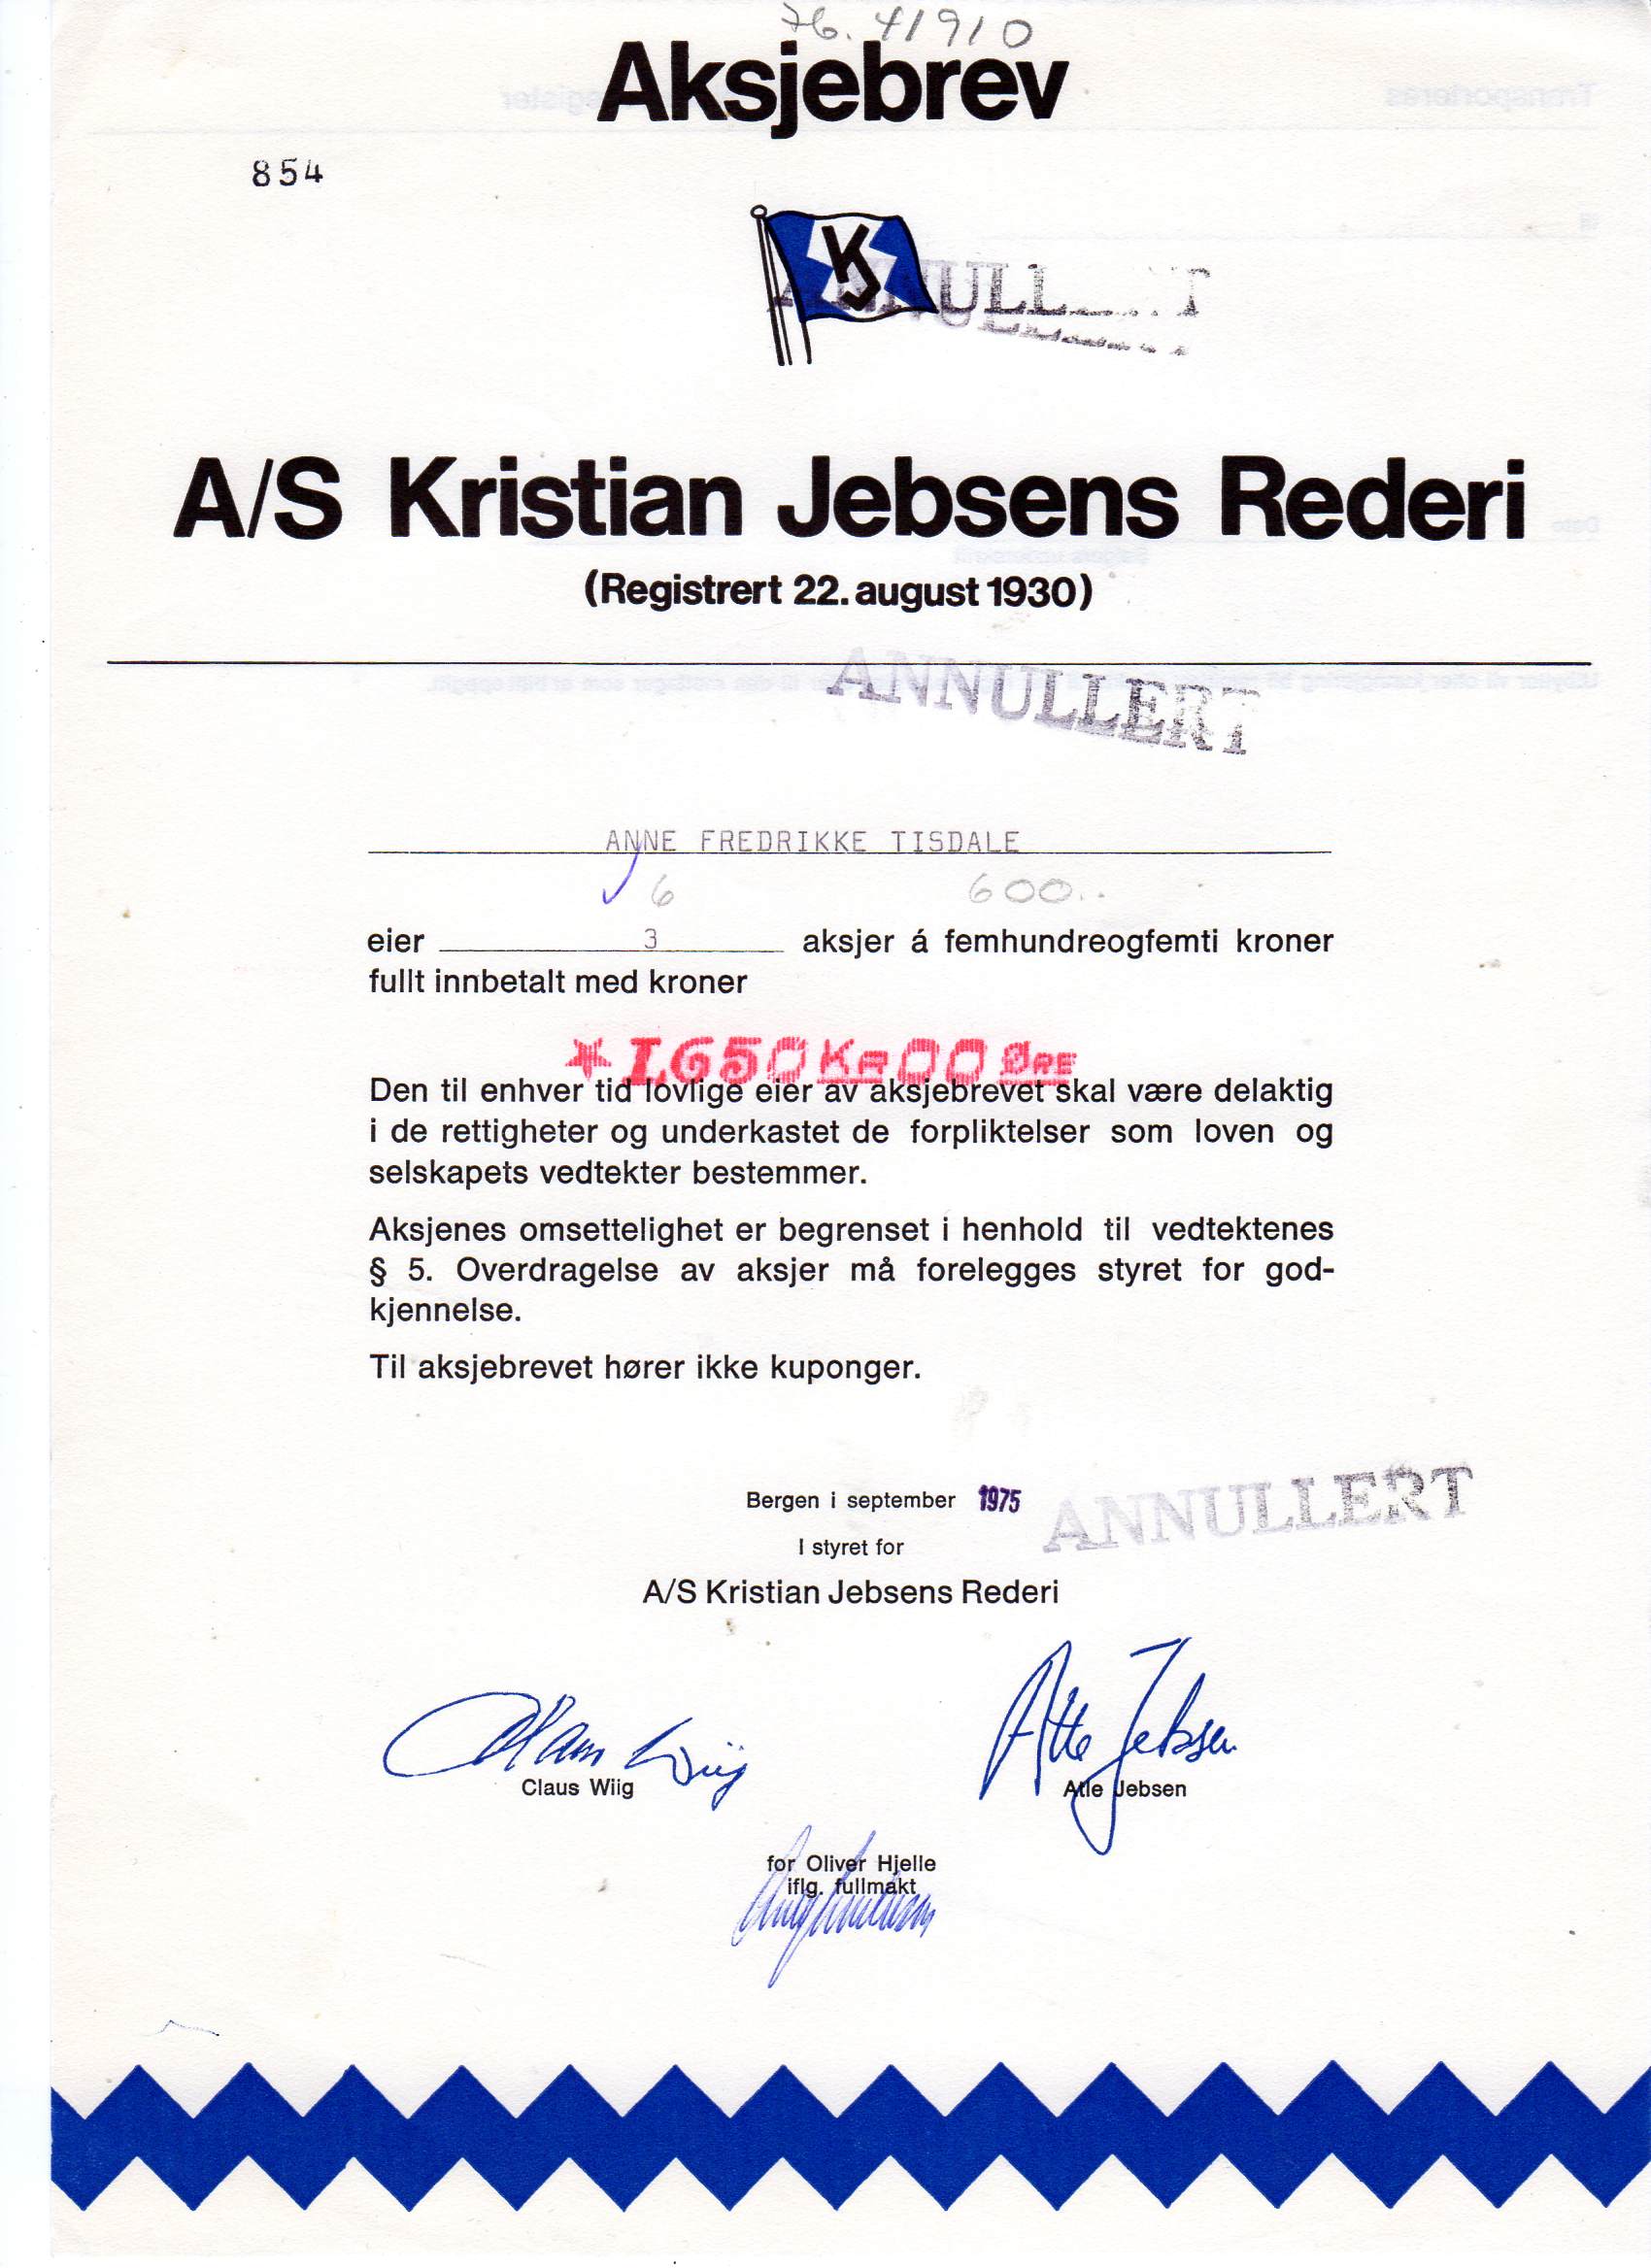 Kristian Jebsens rederi 1975 Bergen kr 1650 nr 854